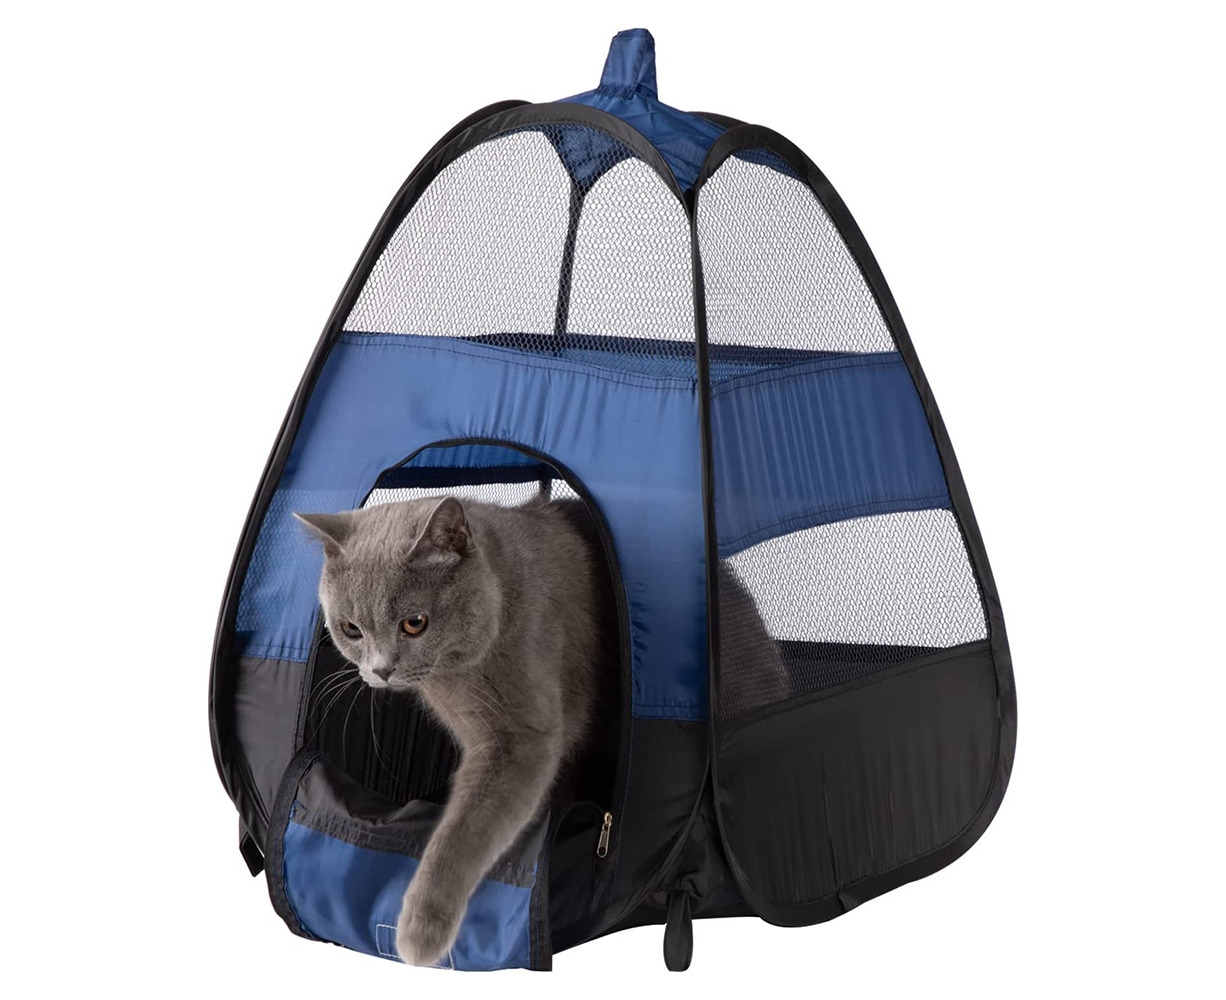 Portable Folding Pet Tent Pet Supplies Outdoor Dog Sun Shelter House Mini Kitty Cat Dog Tent Blue 